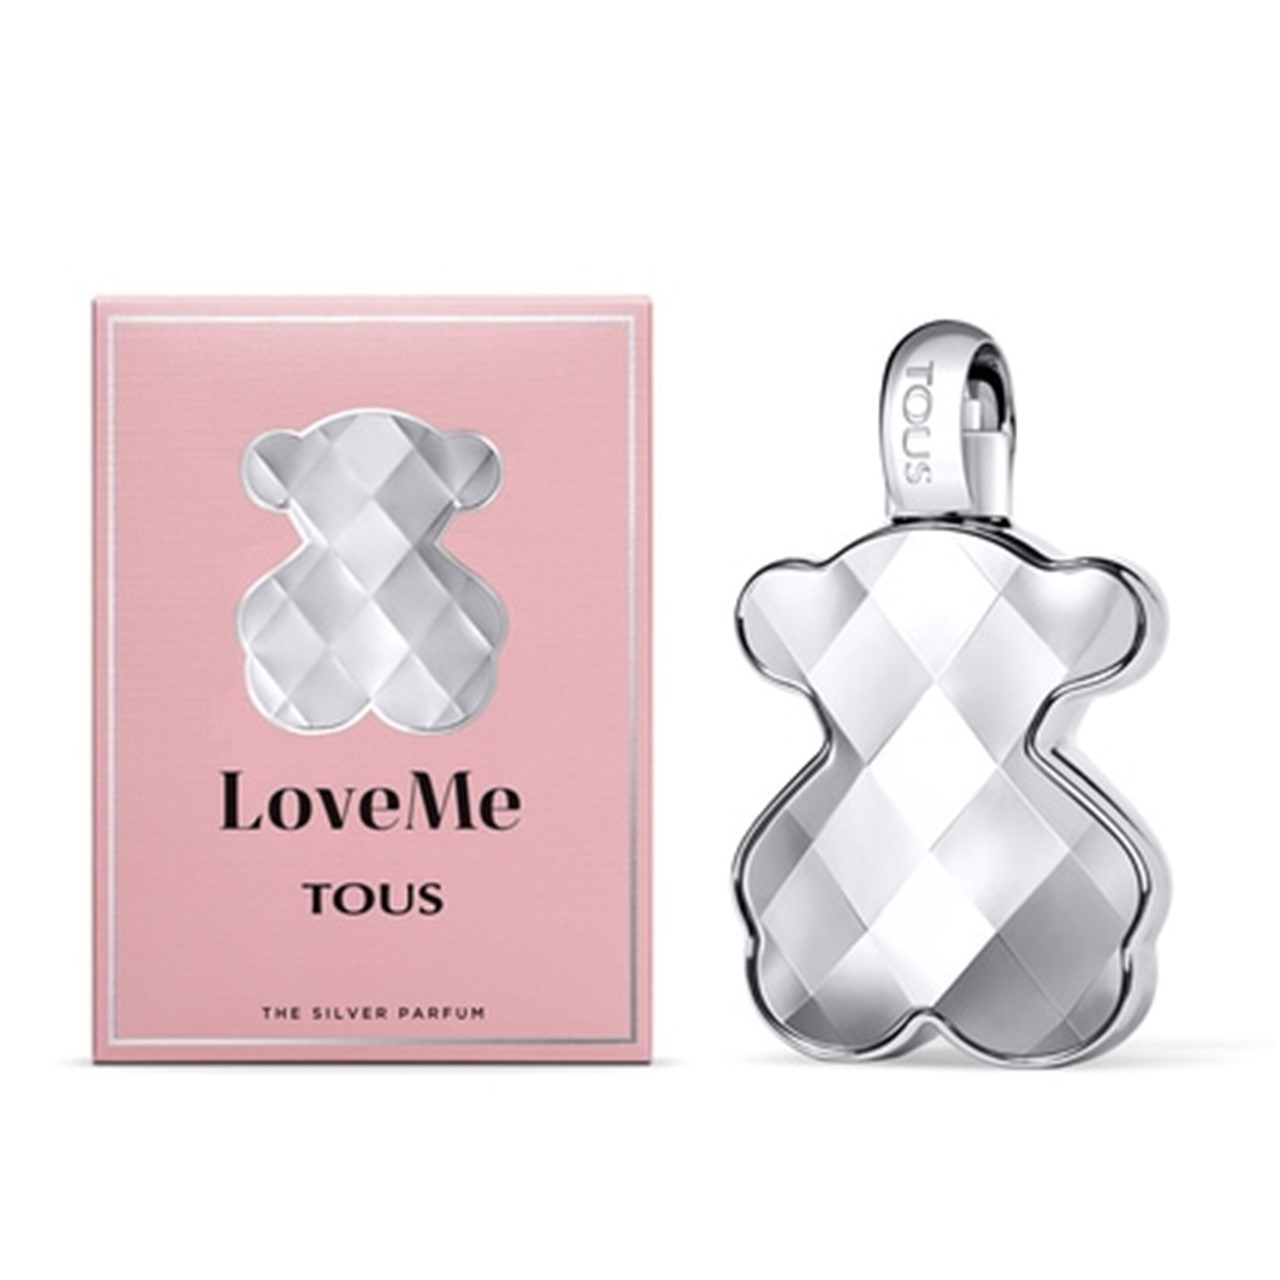 Tous LoveMe The Silver Parfum 90ml (3 fl oz)